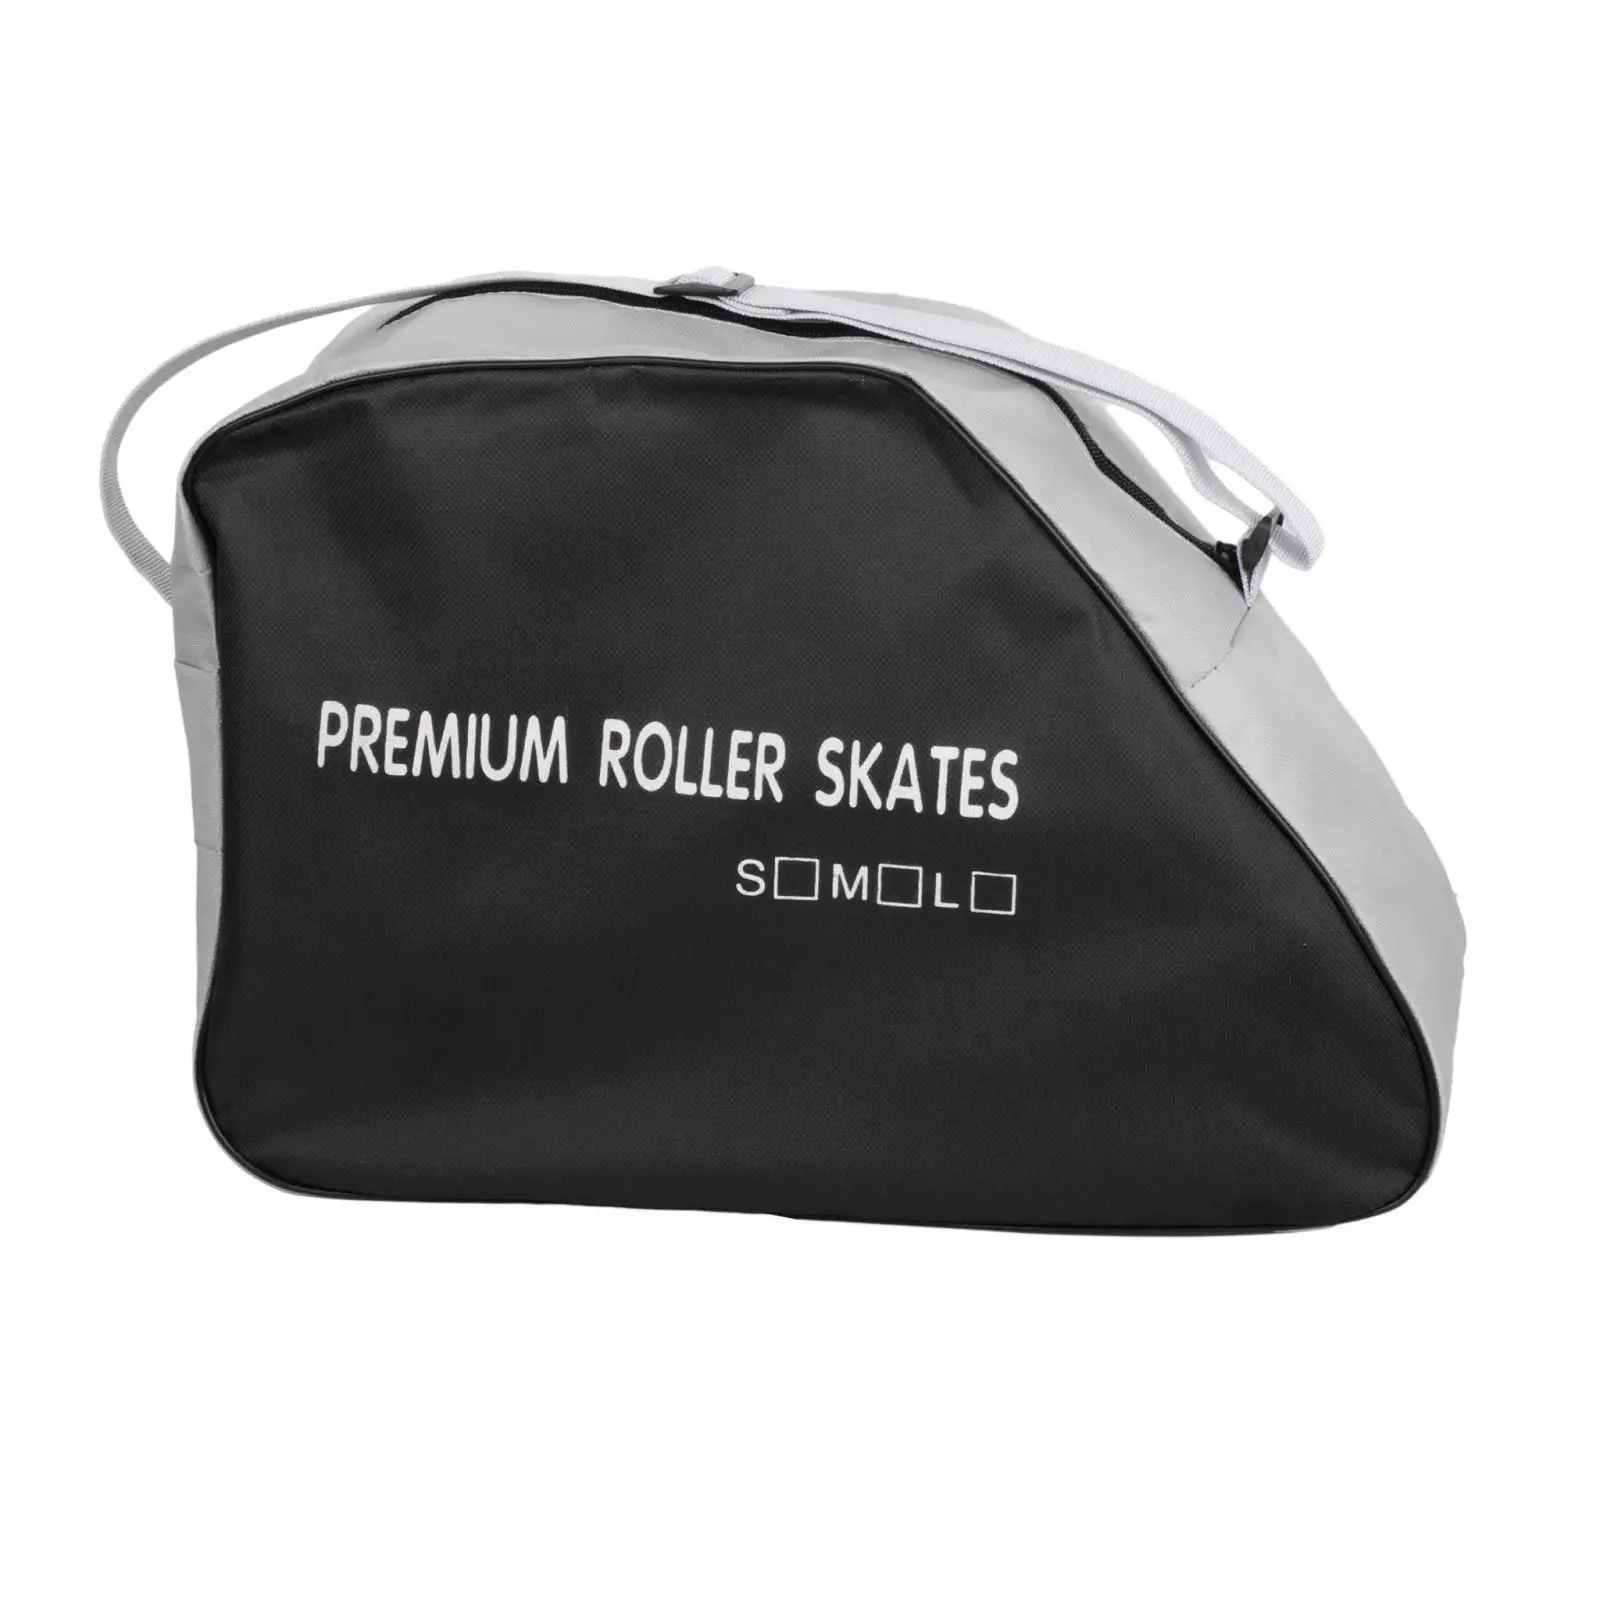 Skate Carry Bag Portable Accessories Skating Shoes Bag for Quad Skates Rollerblade Inline Skates Ice Skates Ice Hockey Skate